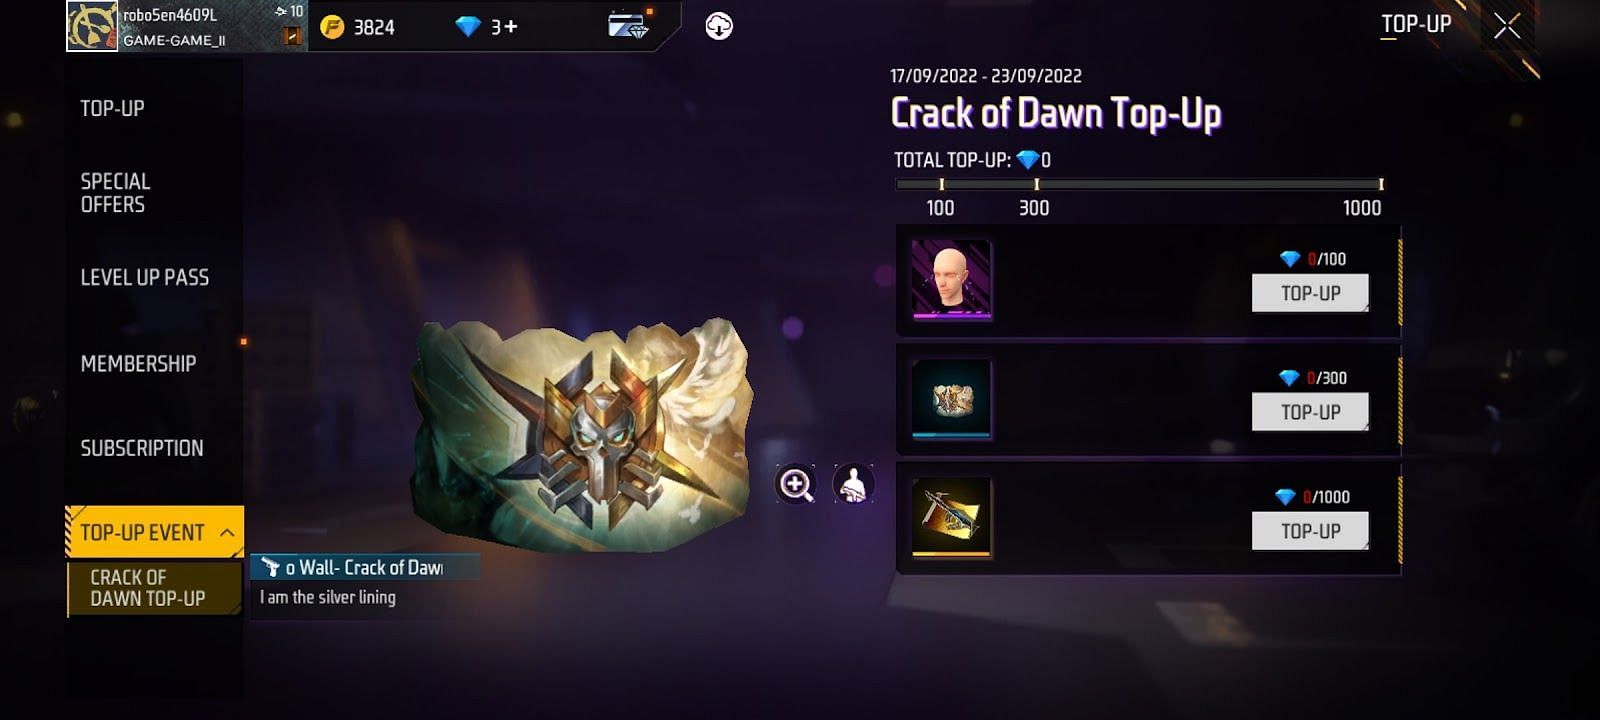 Crack of Dawn Top-Up features three free rewards (Image via Garena)